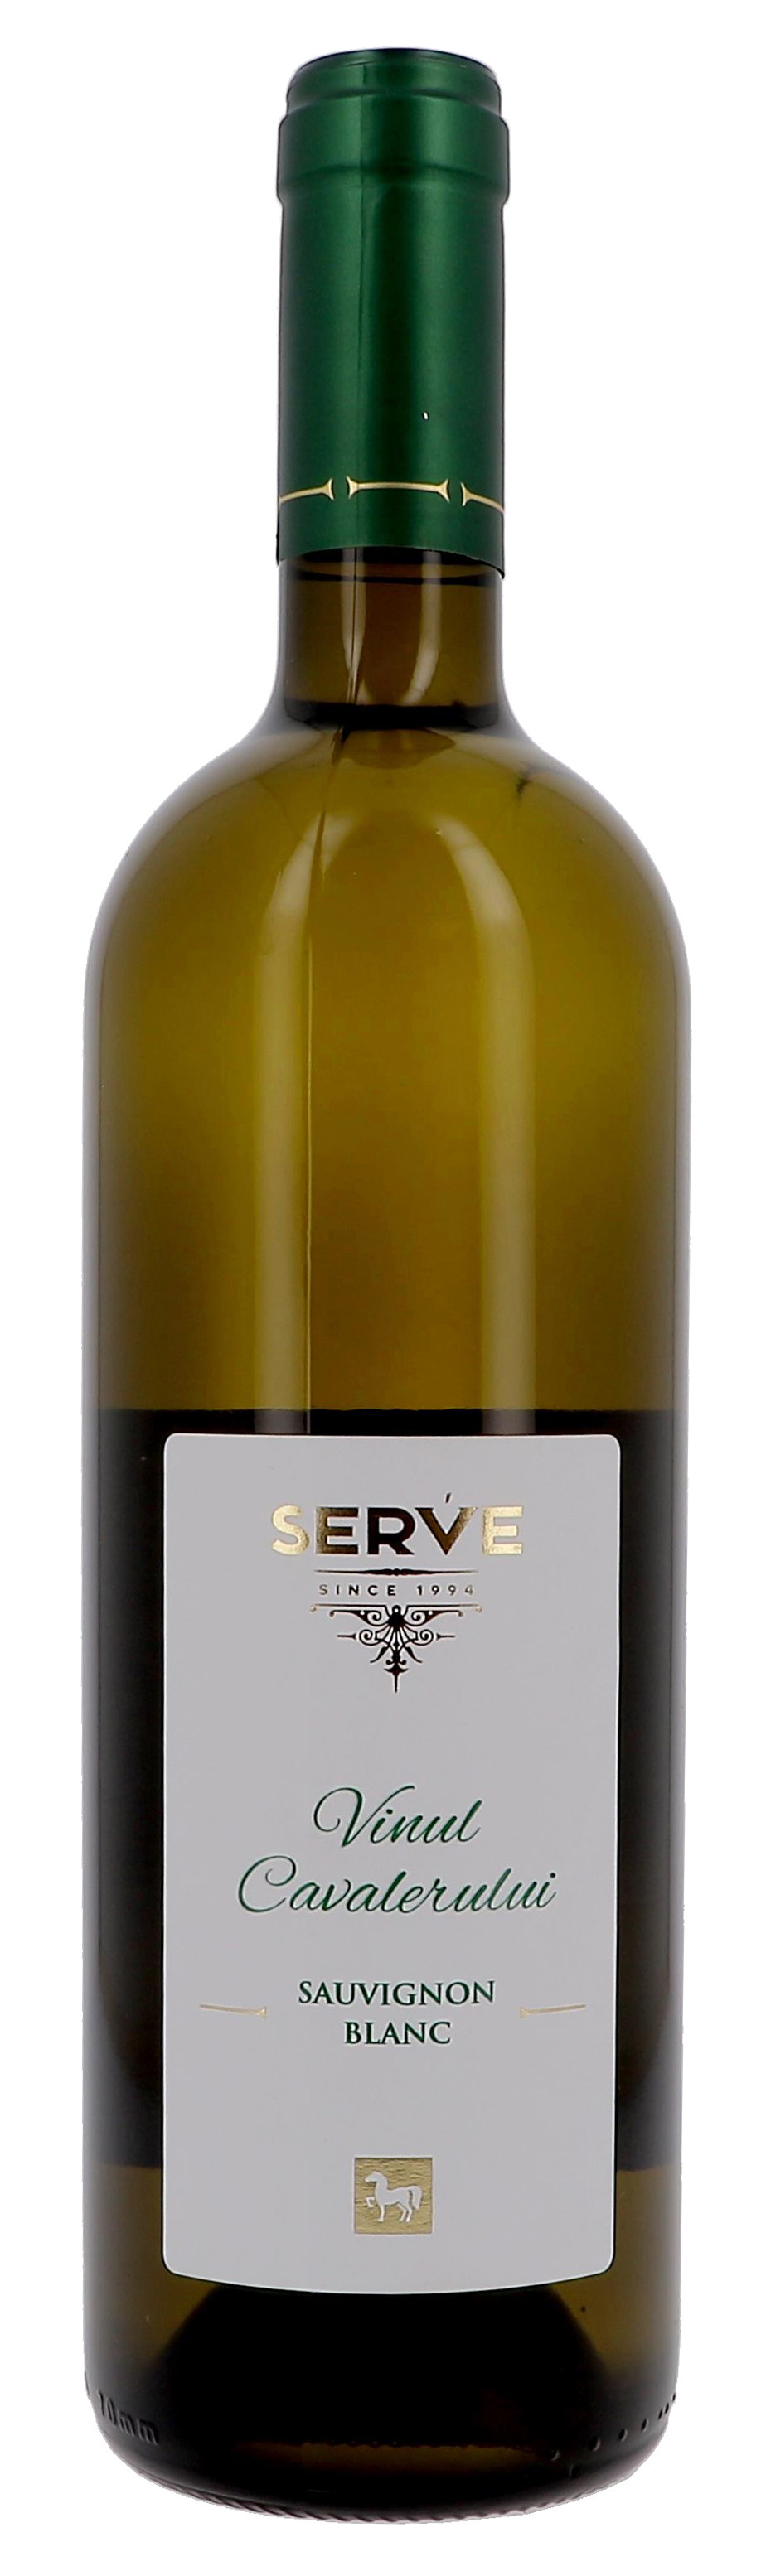 Vinul Cavalerului Sauvignon Blanc 75cl Serve Wines - Roumanie